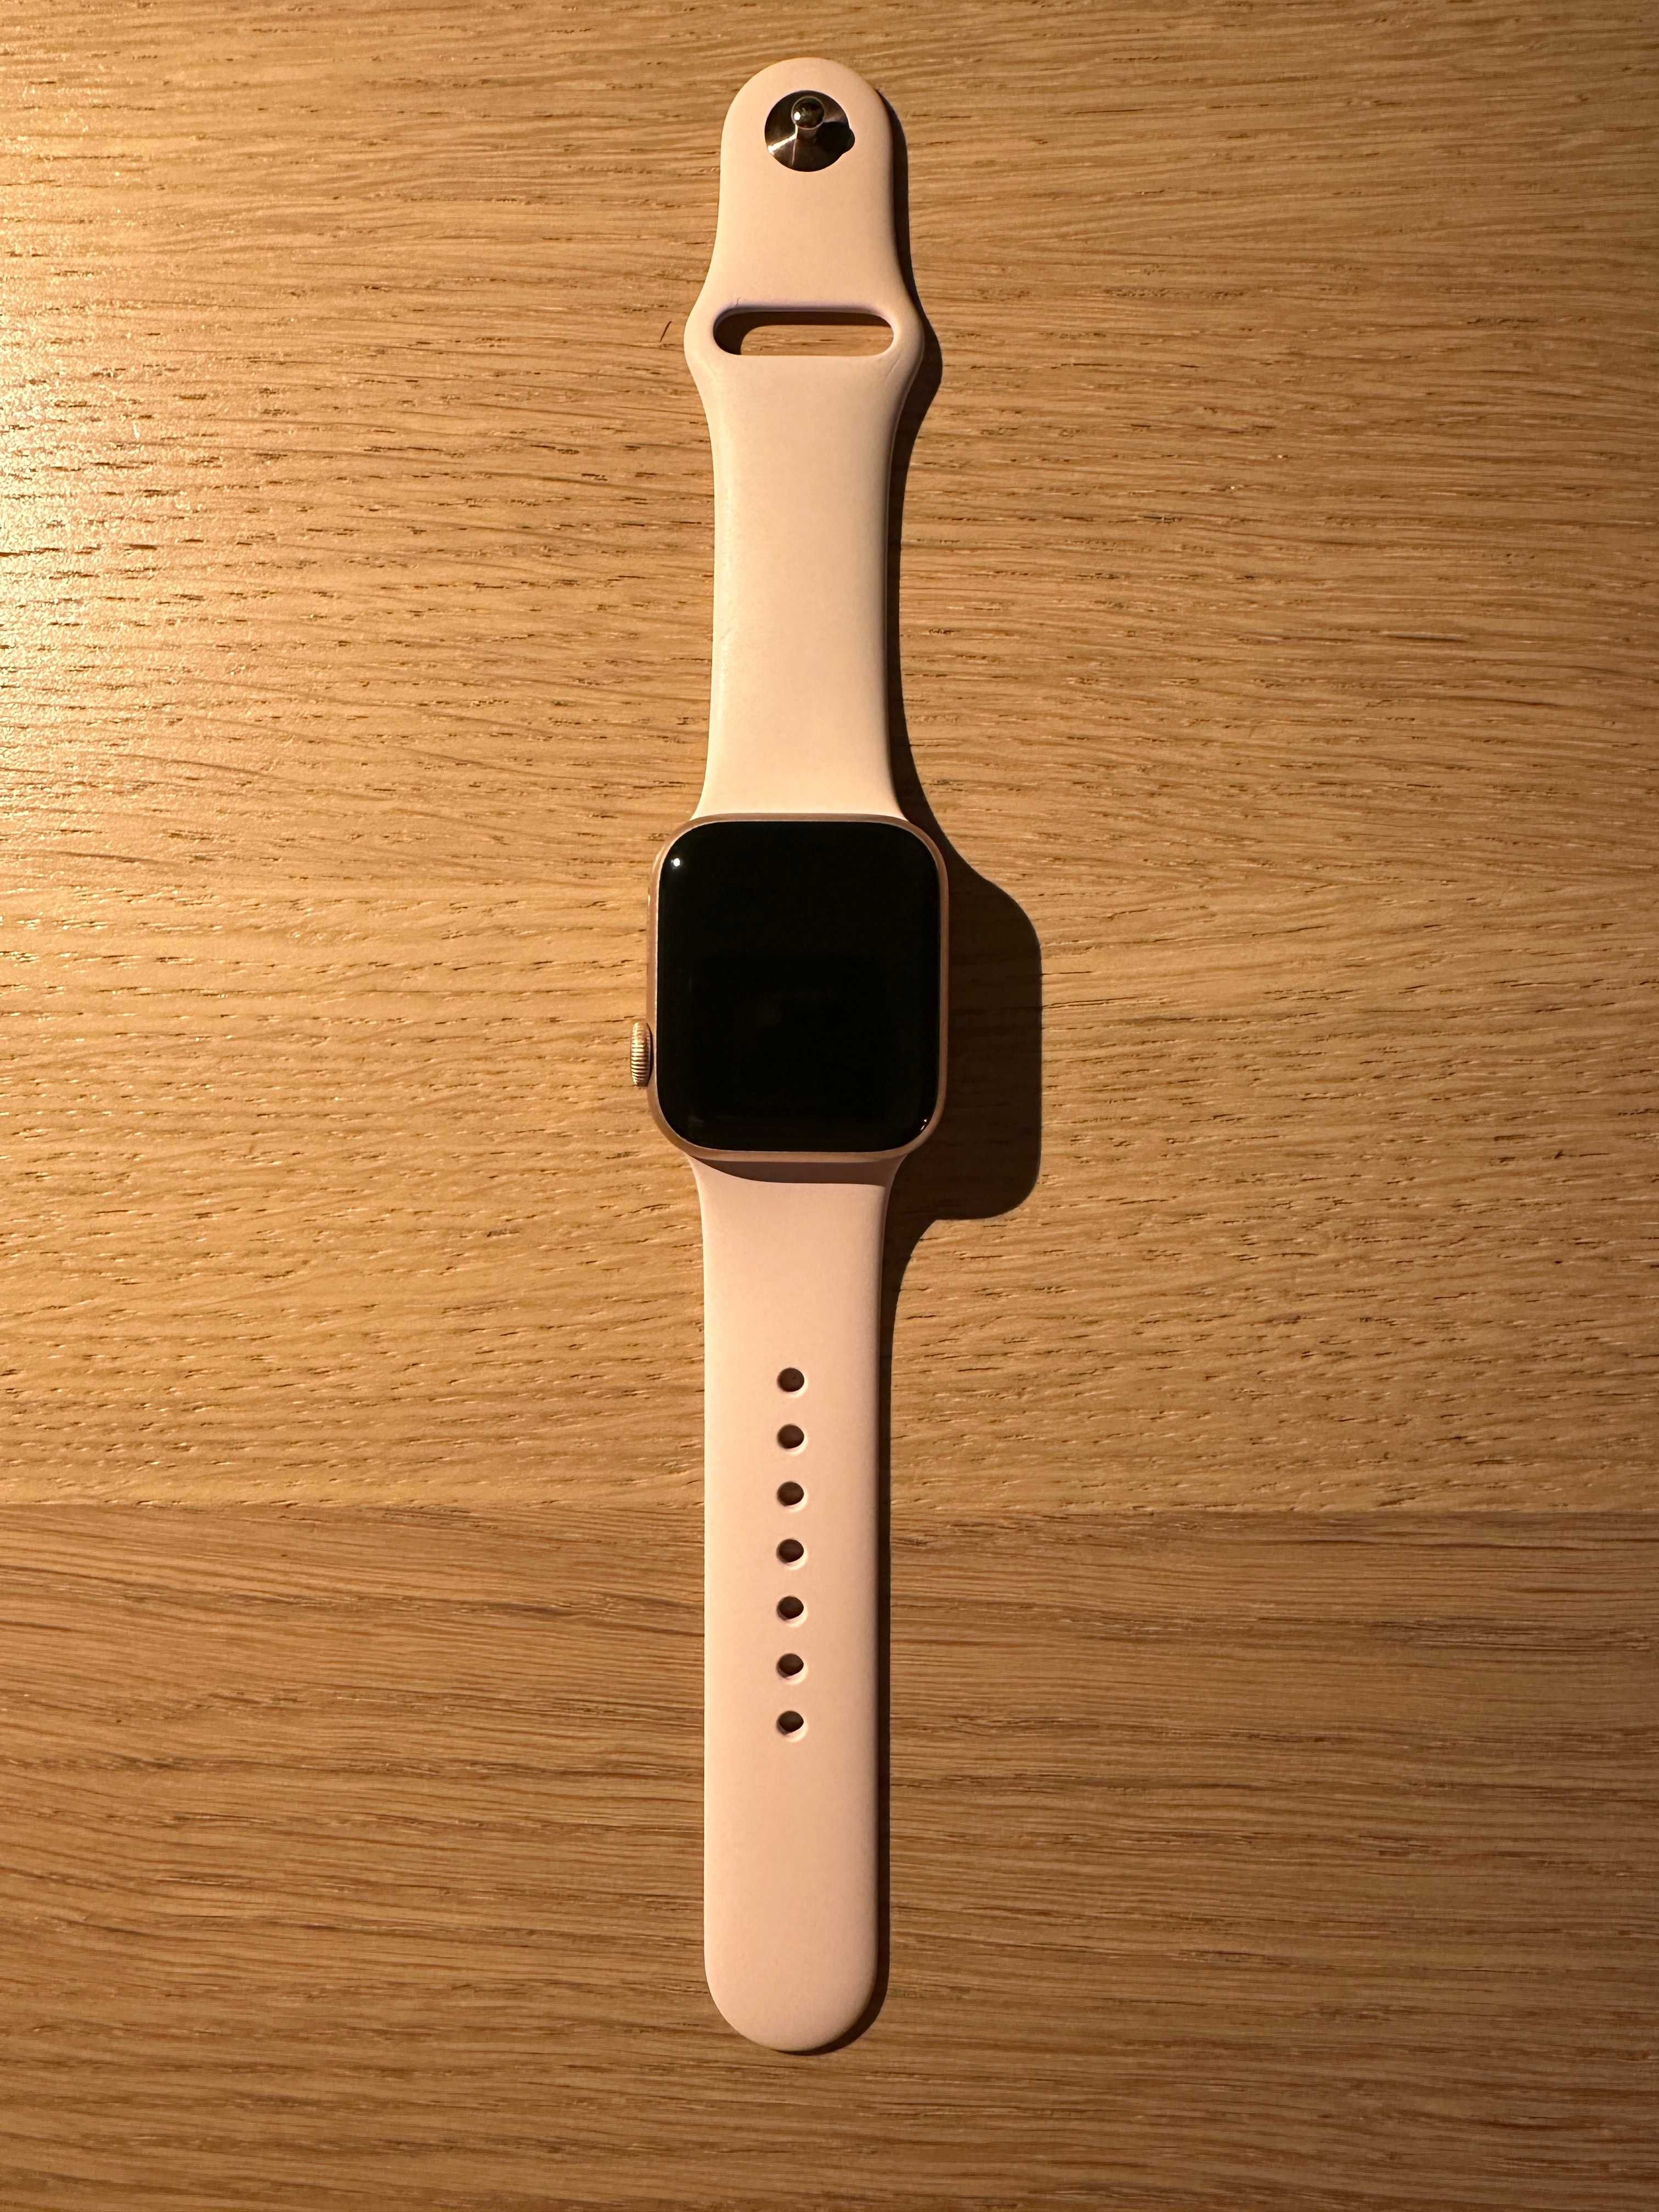 Apple Watch seria 4